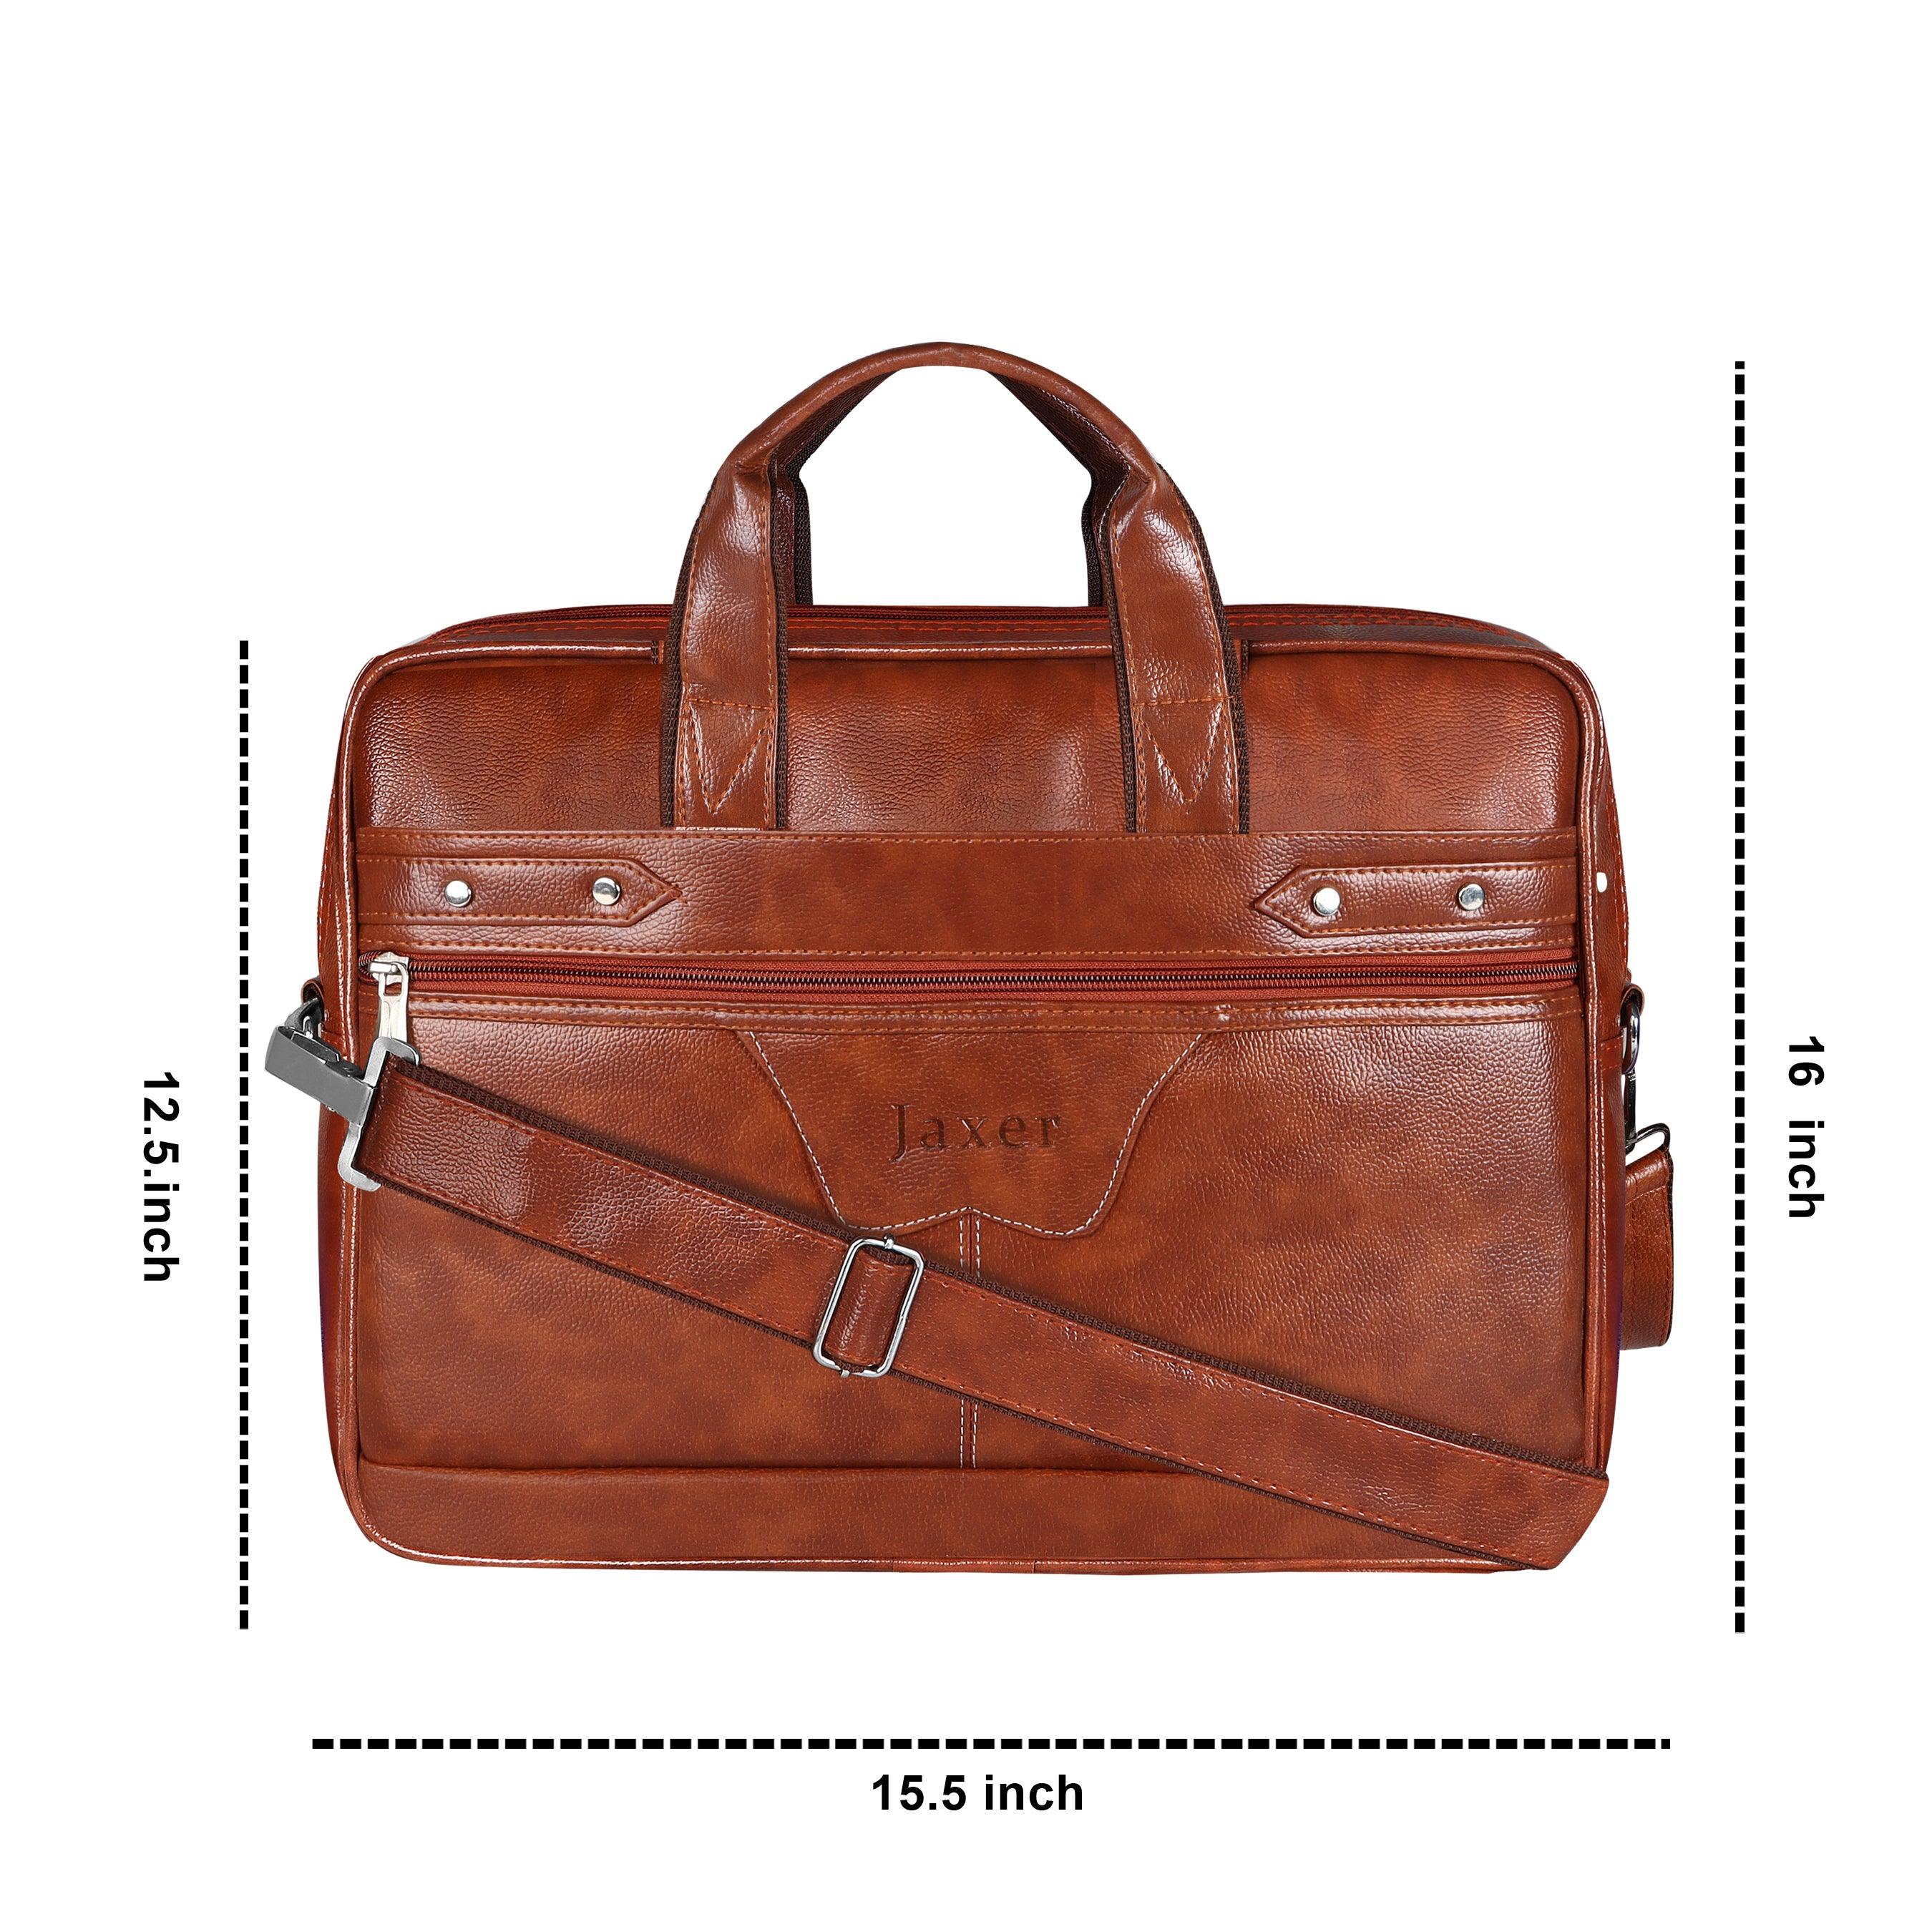 Jaxer Tan Leather Laptop Messenger Bag for Men - JXRMB019 - Jainx Store